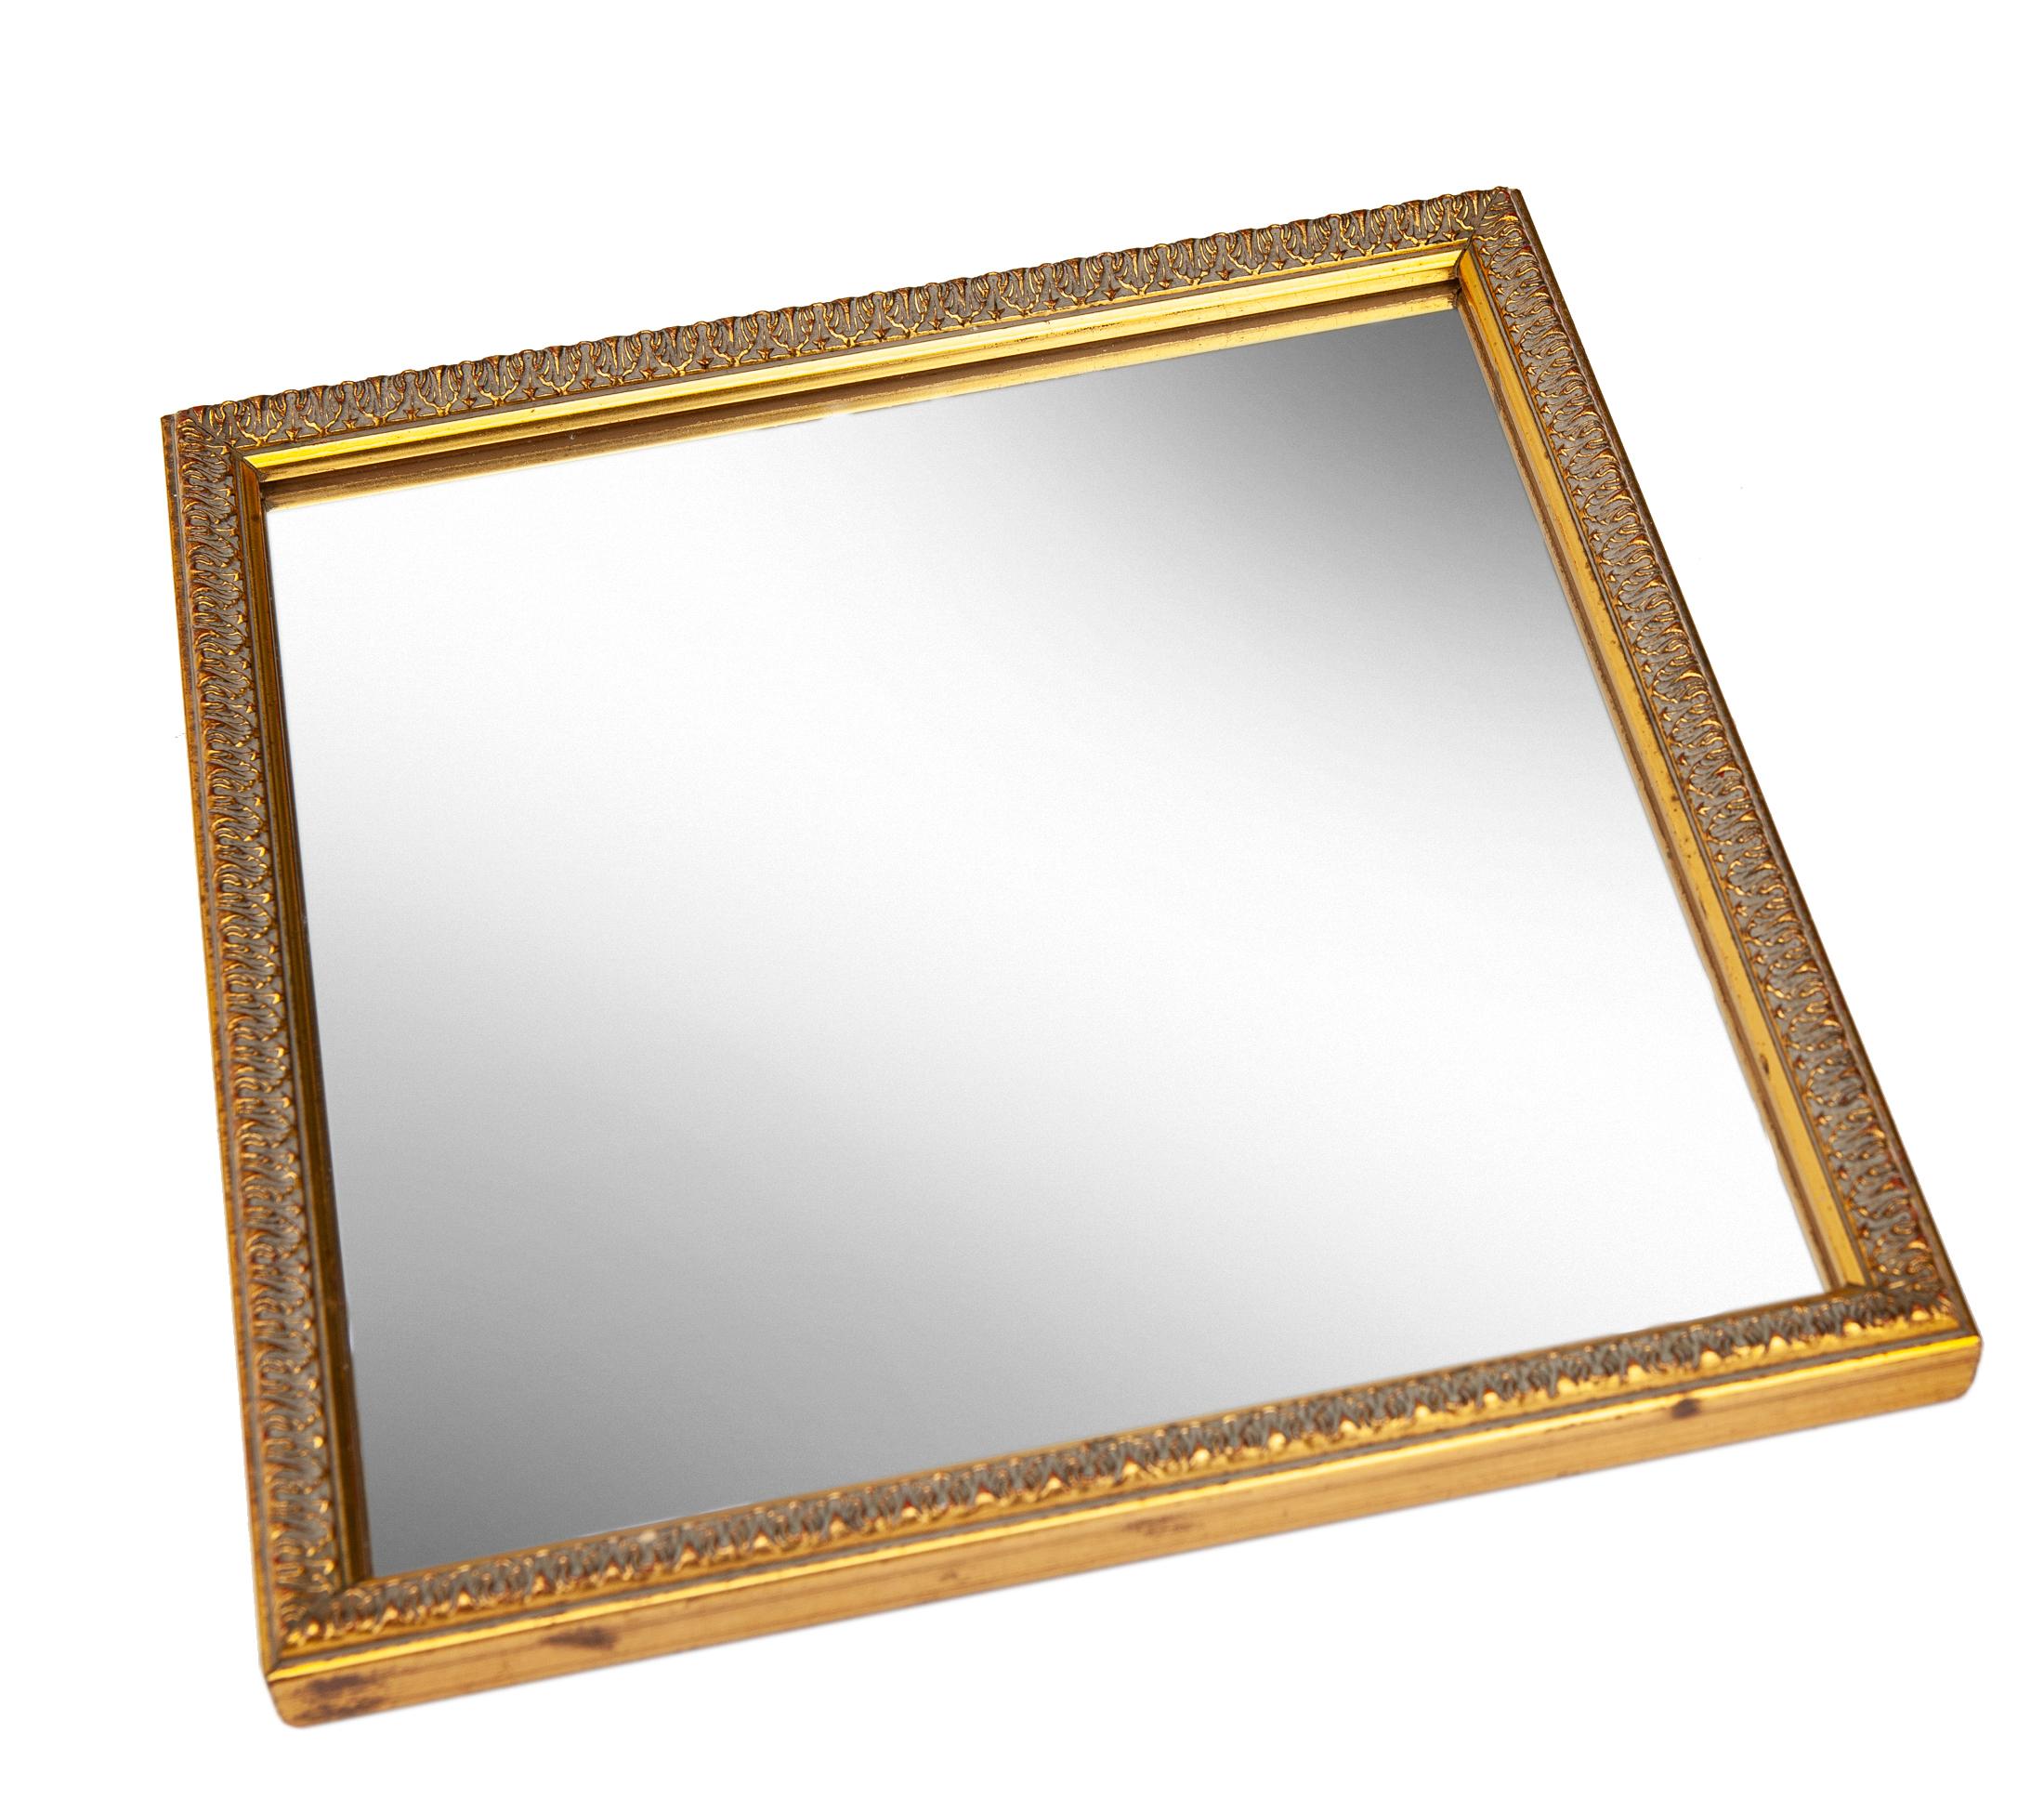 Square Gold Wall Mirror In Good Condition For Sale In Malibu, CA